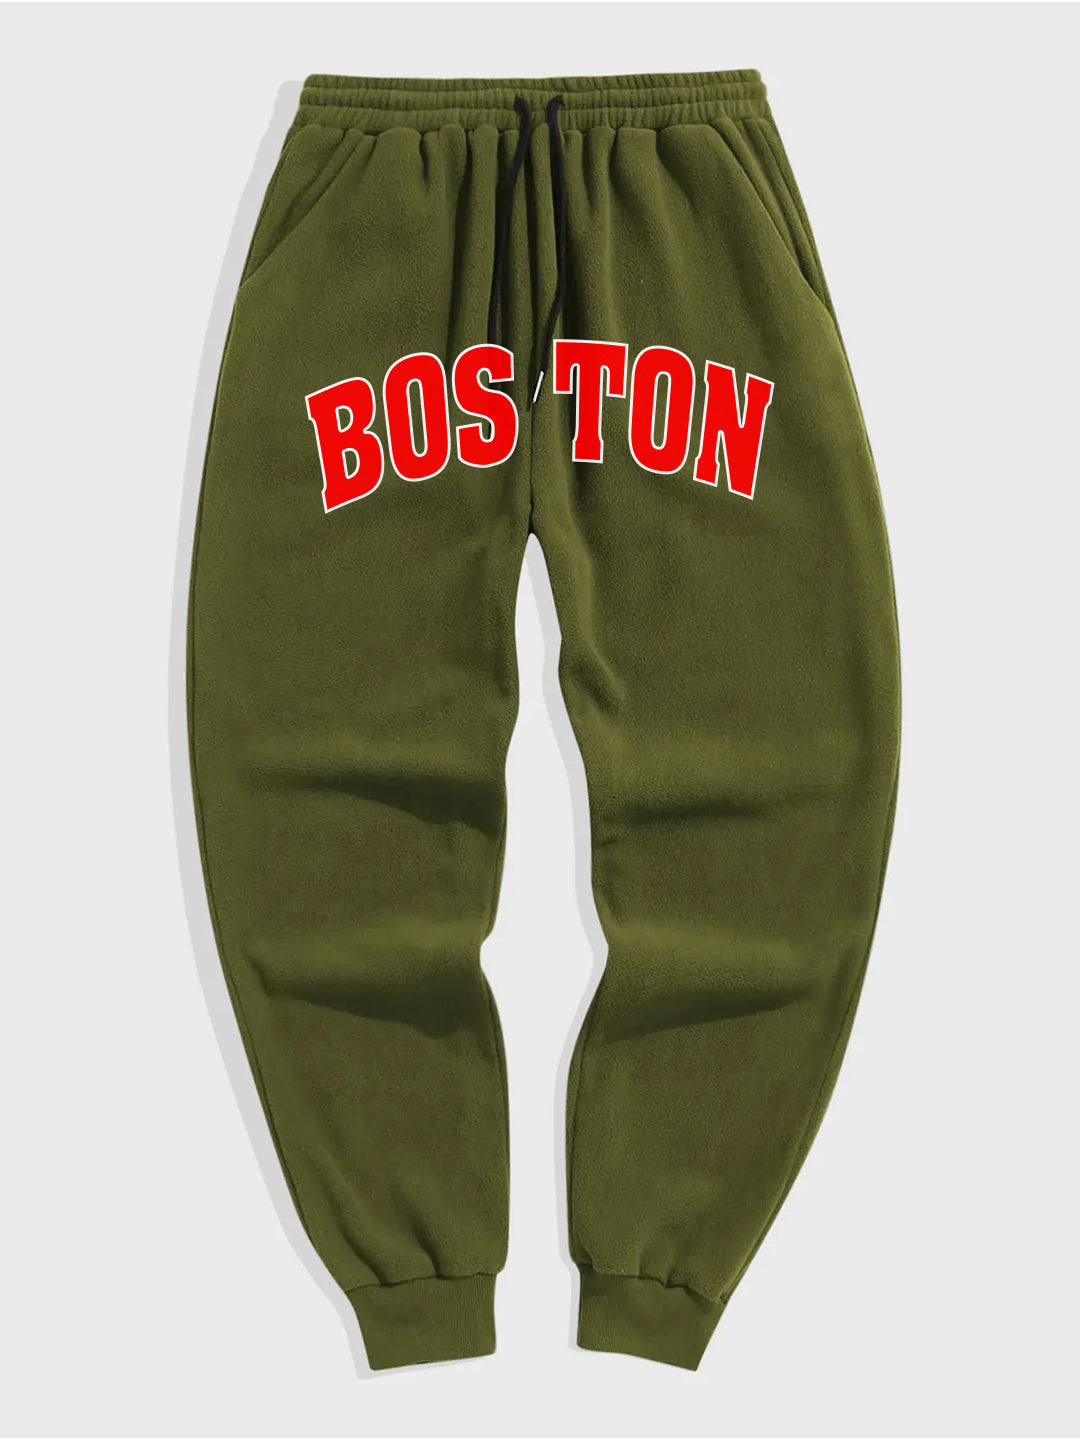 BOSTON Printed Heavy Fleece Trouser / Jogger Pant